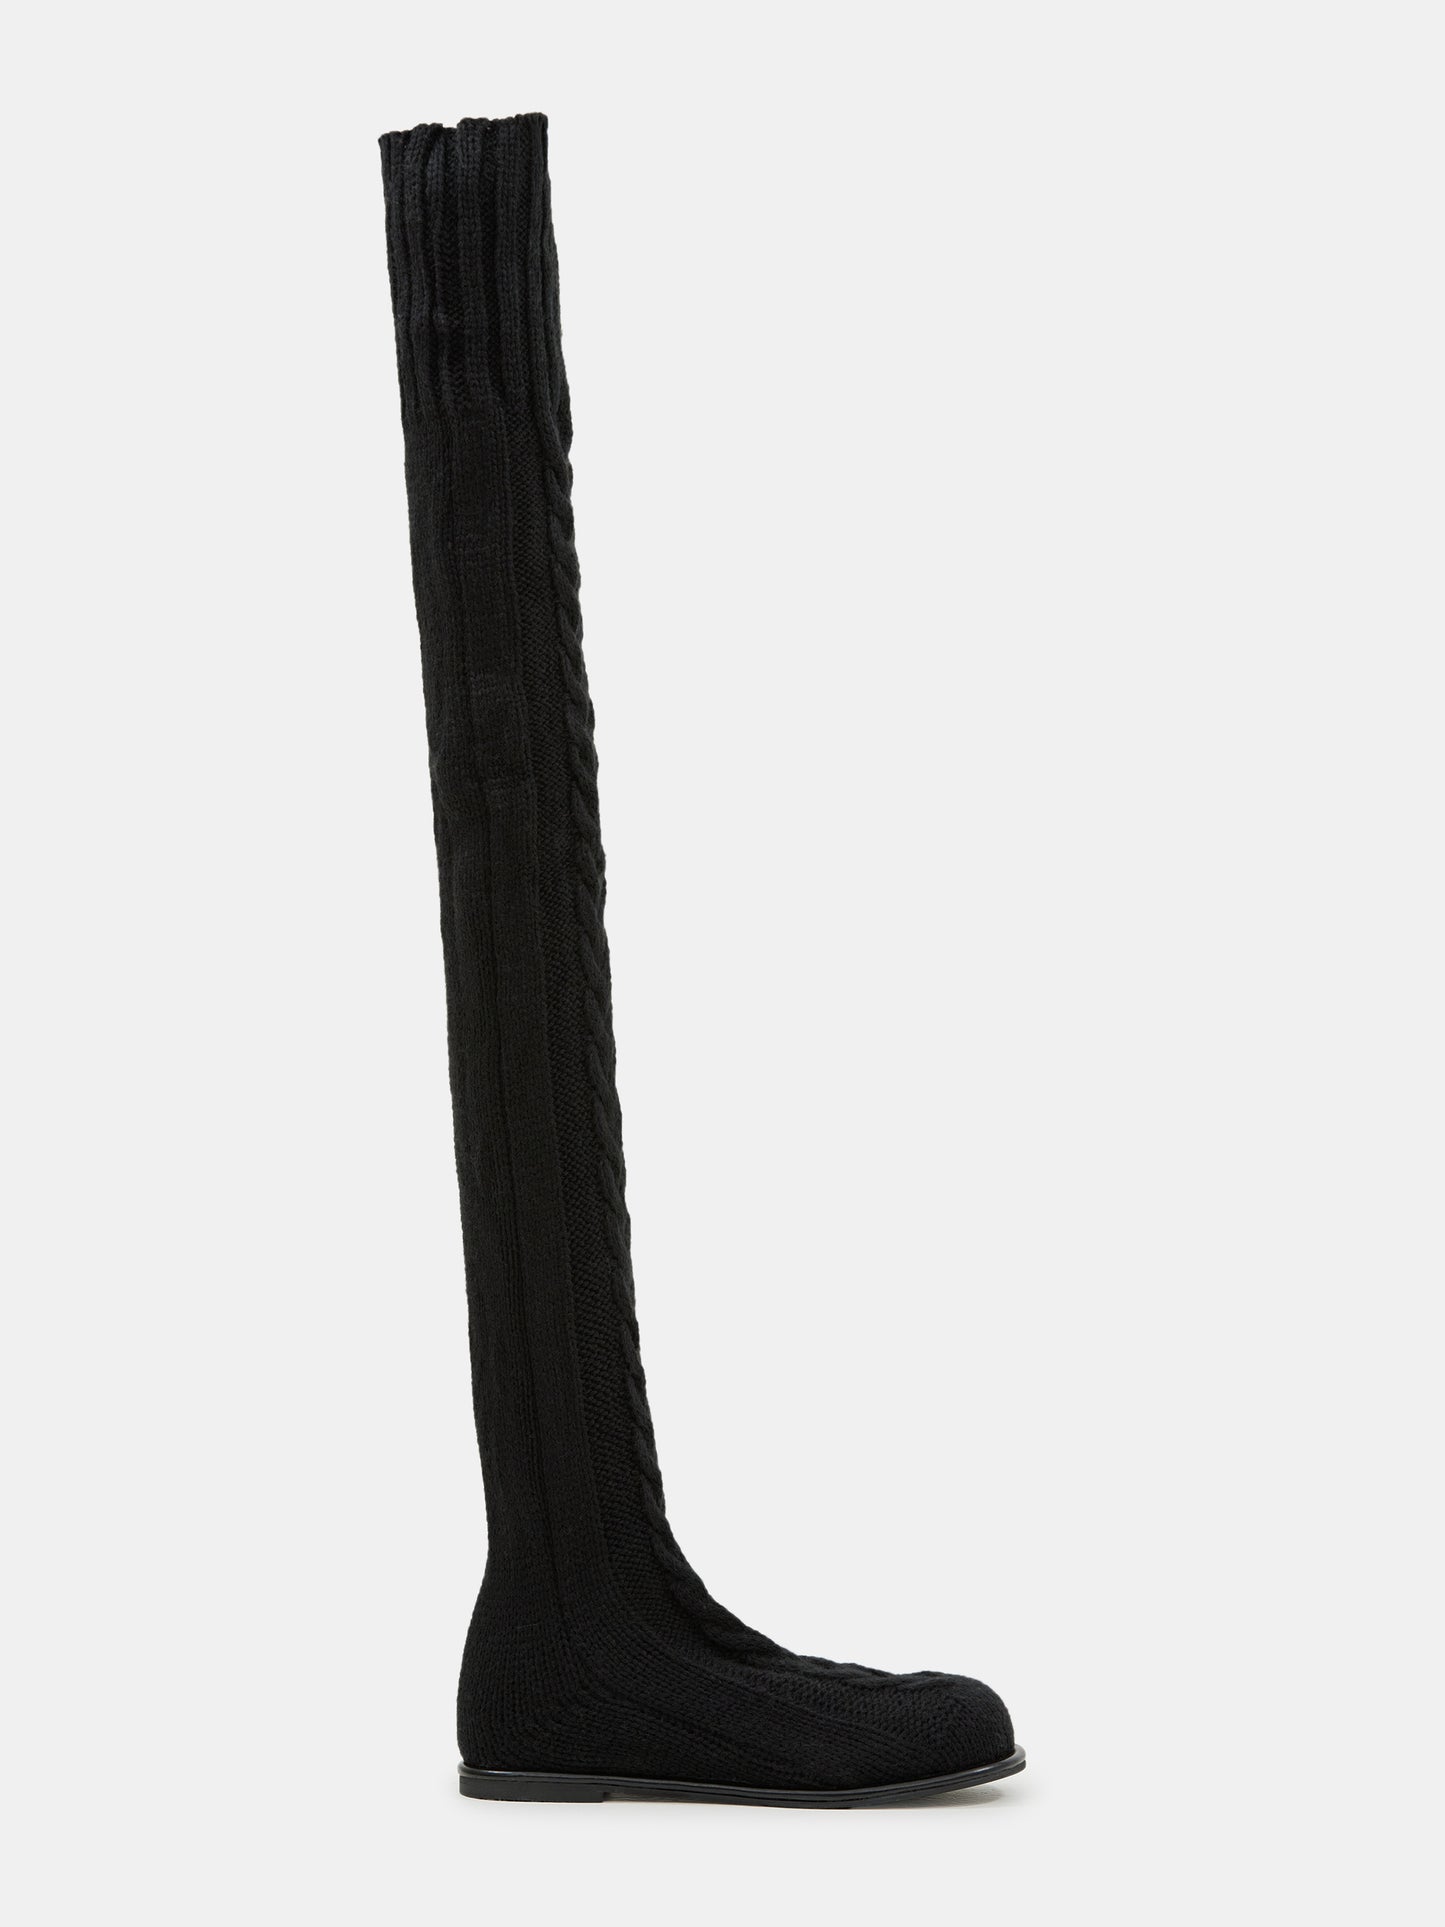 Thigh-High Sock Boots, Black